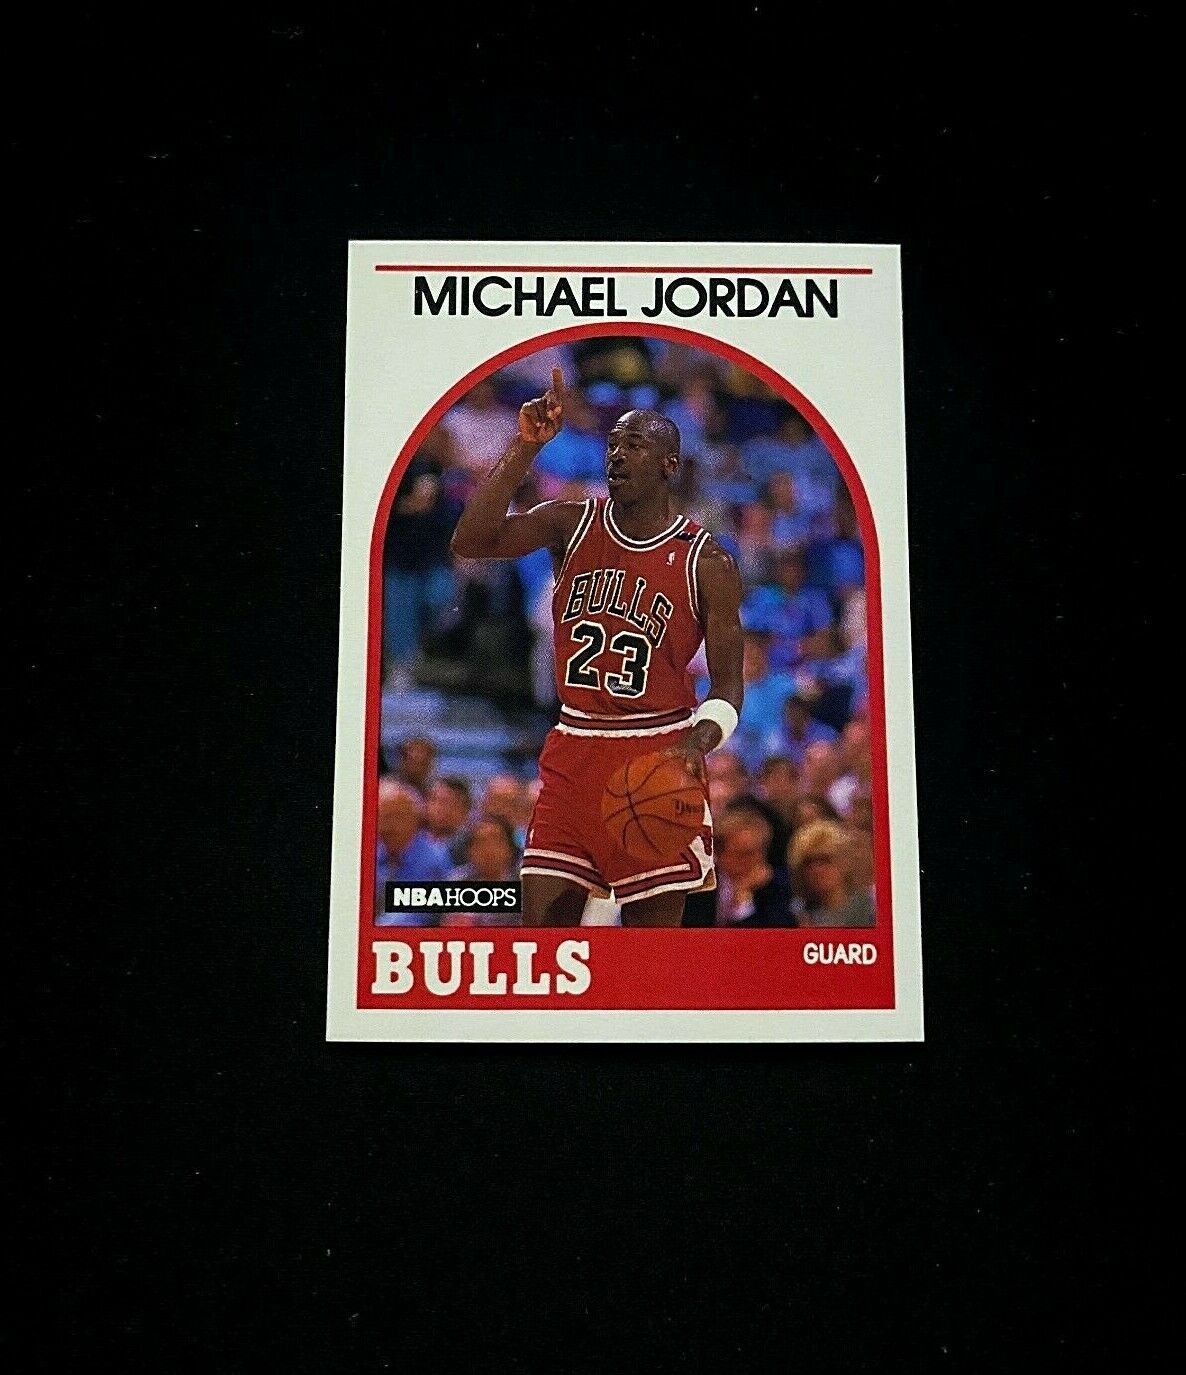 1989 NBA Hoops Michael Jordan Card! (GREAT CONDITION!)